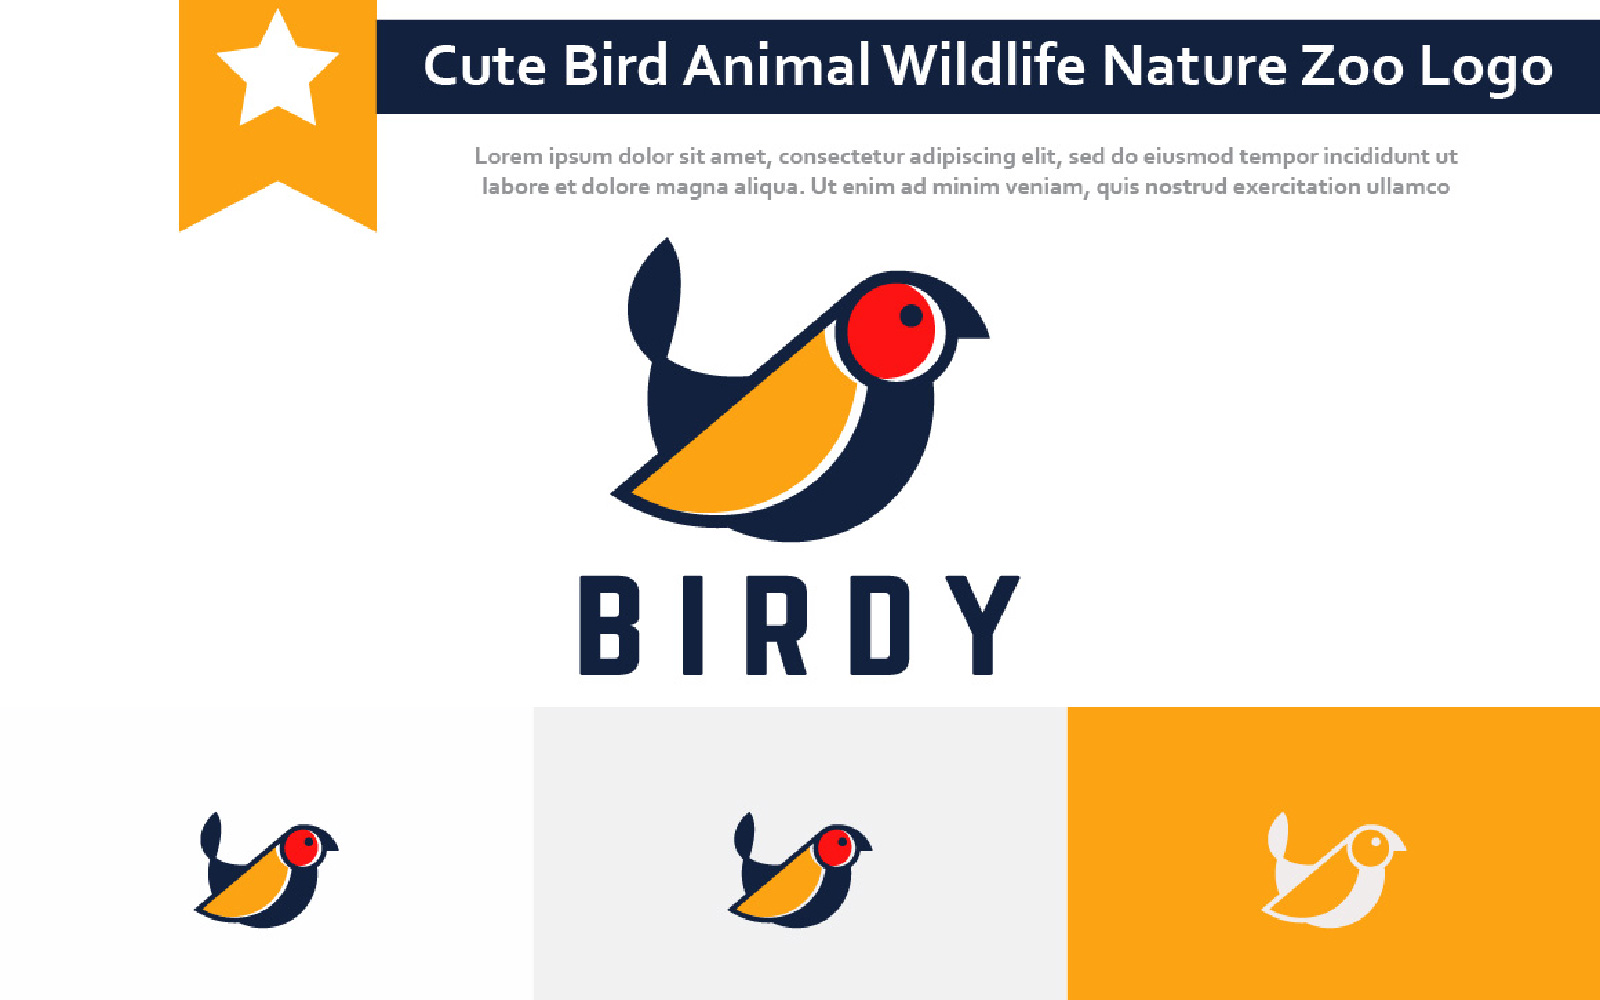 Cute Bird Animal Wildlife Nature Zoo Logo